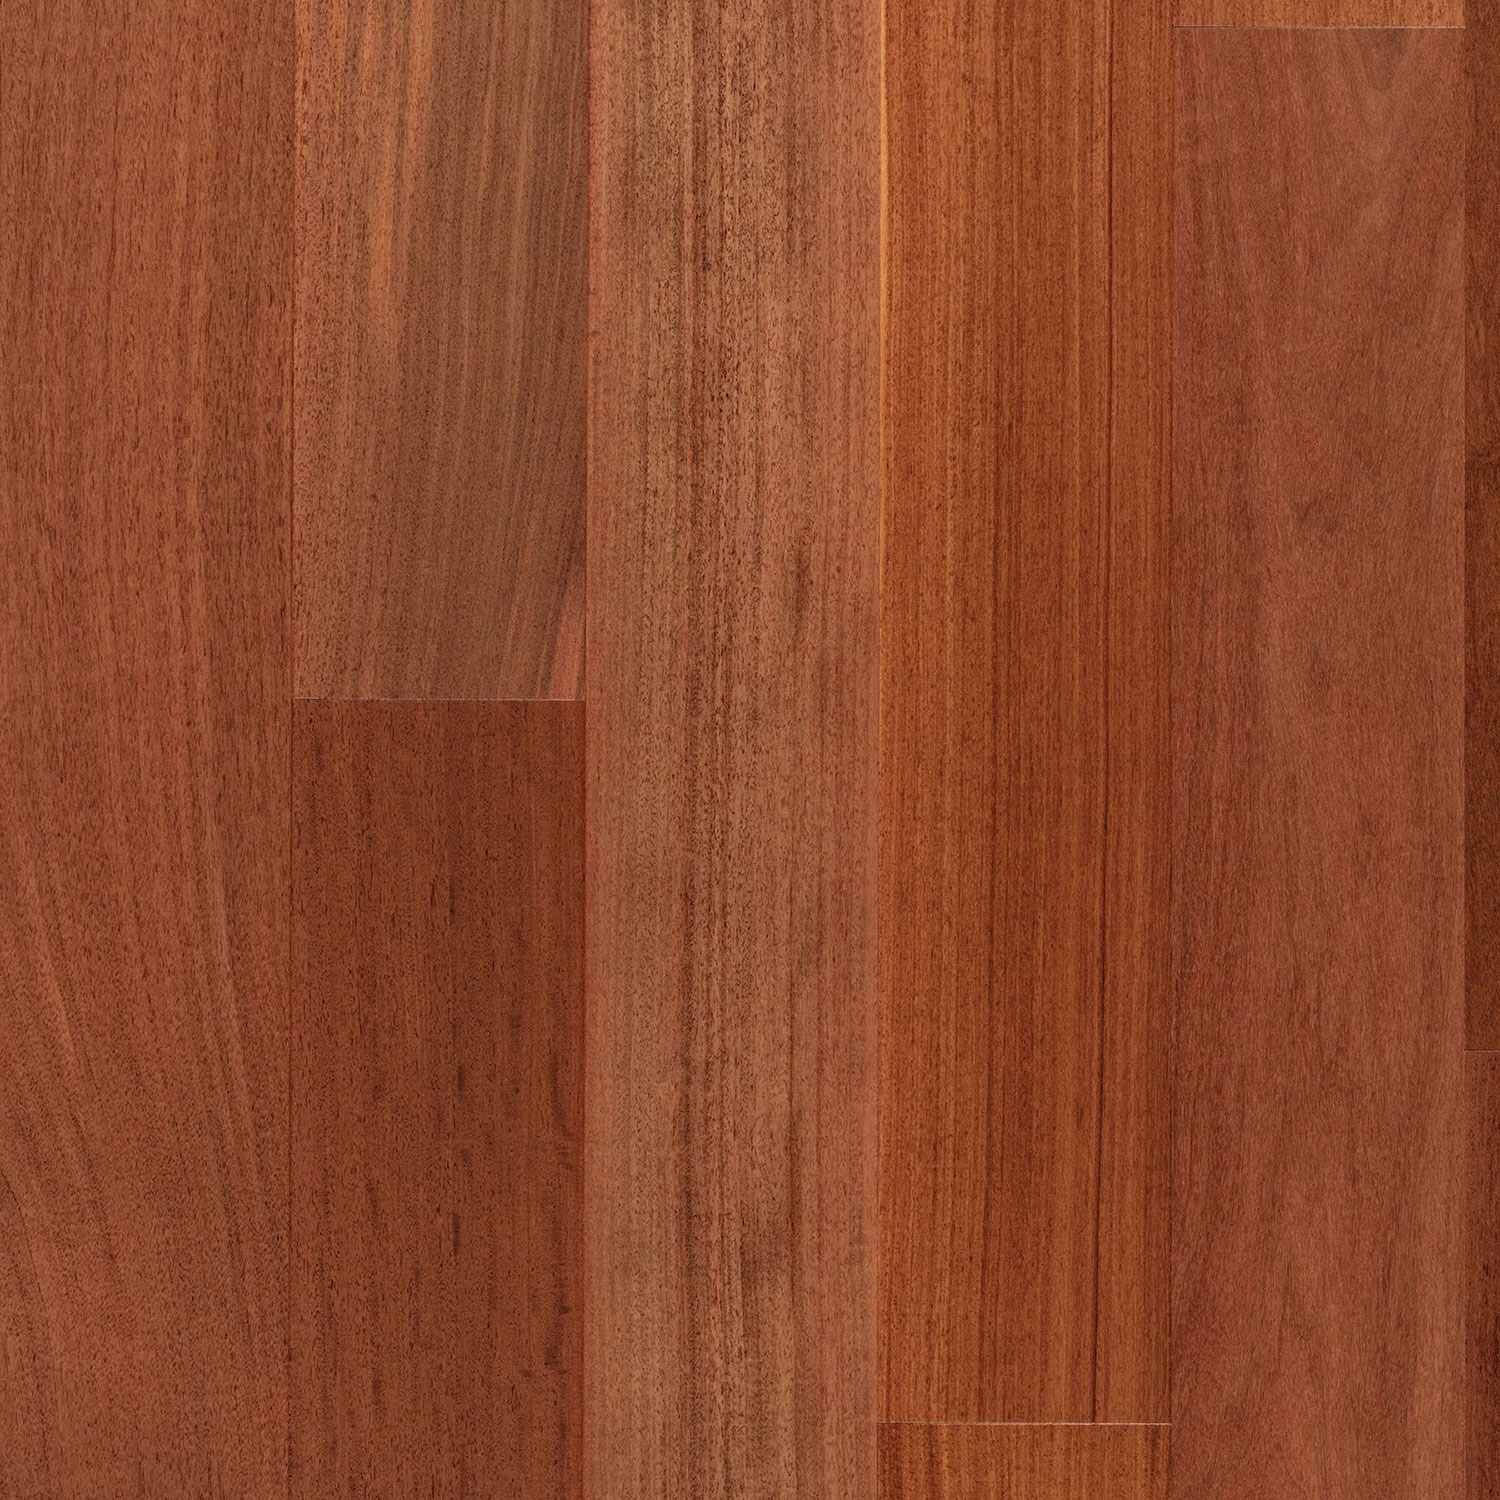 Santos mahogany flooring